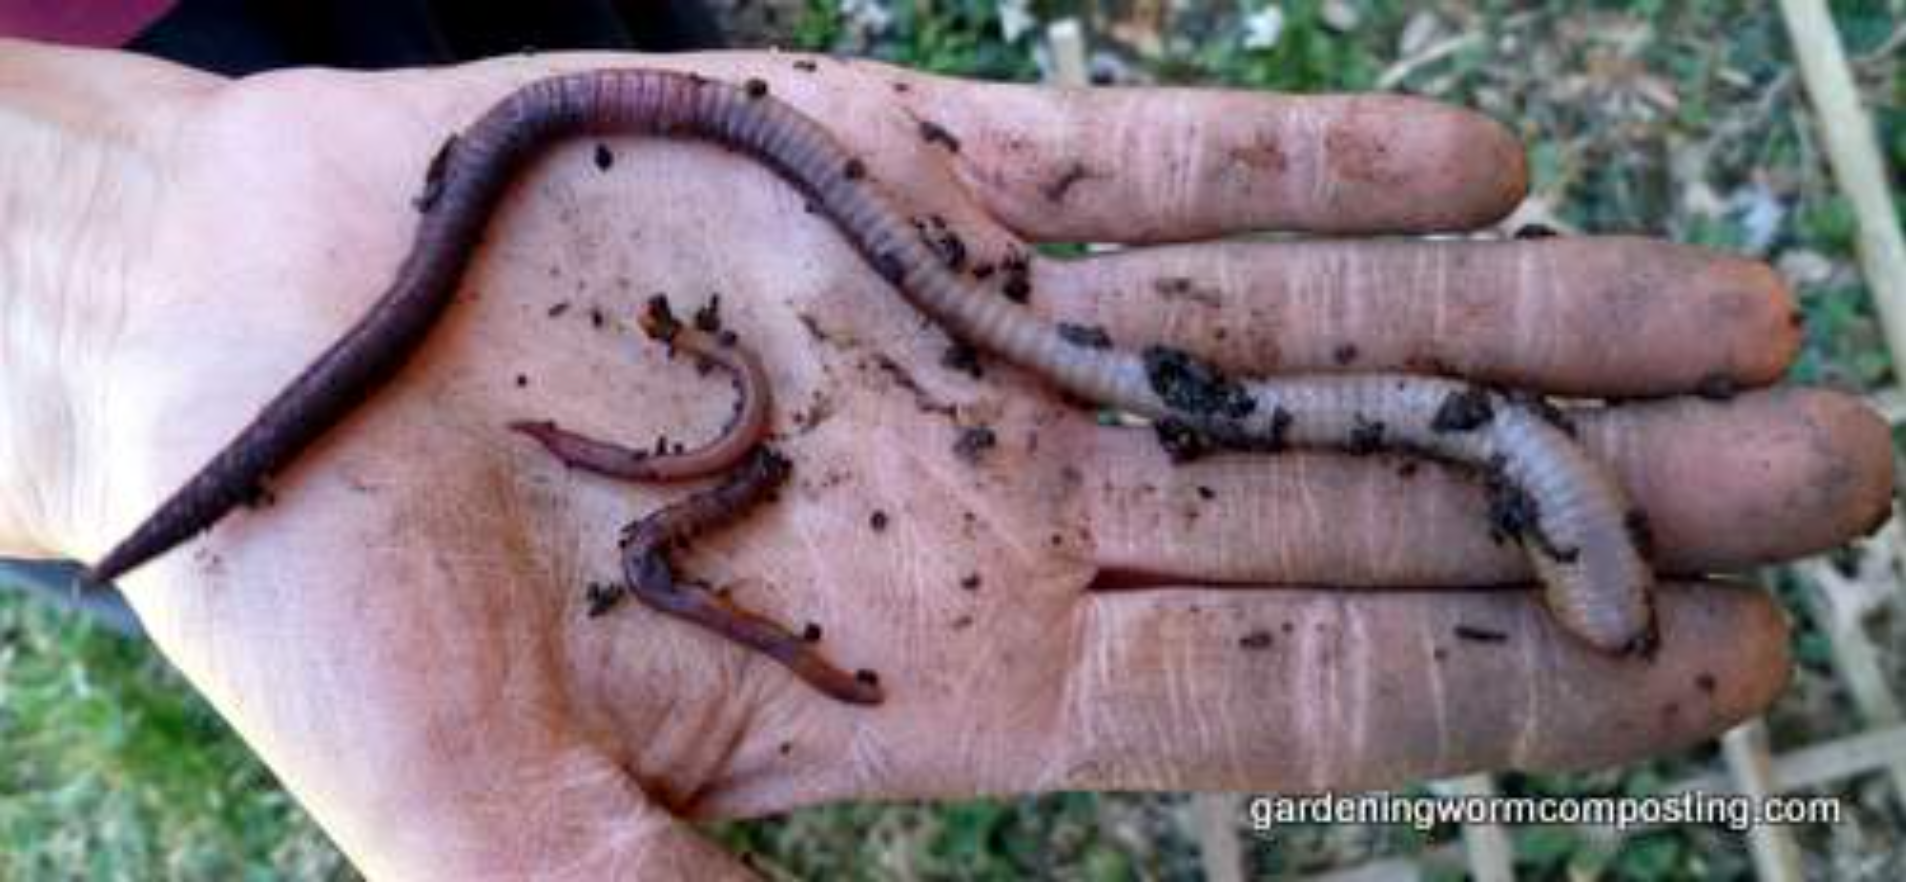 Do Earthworms Really Like the “Worm” Welcome?